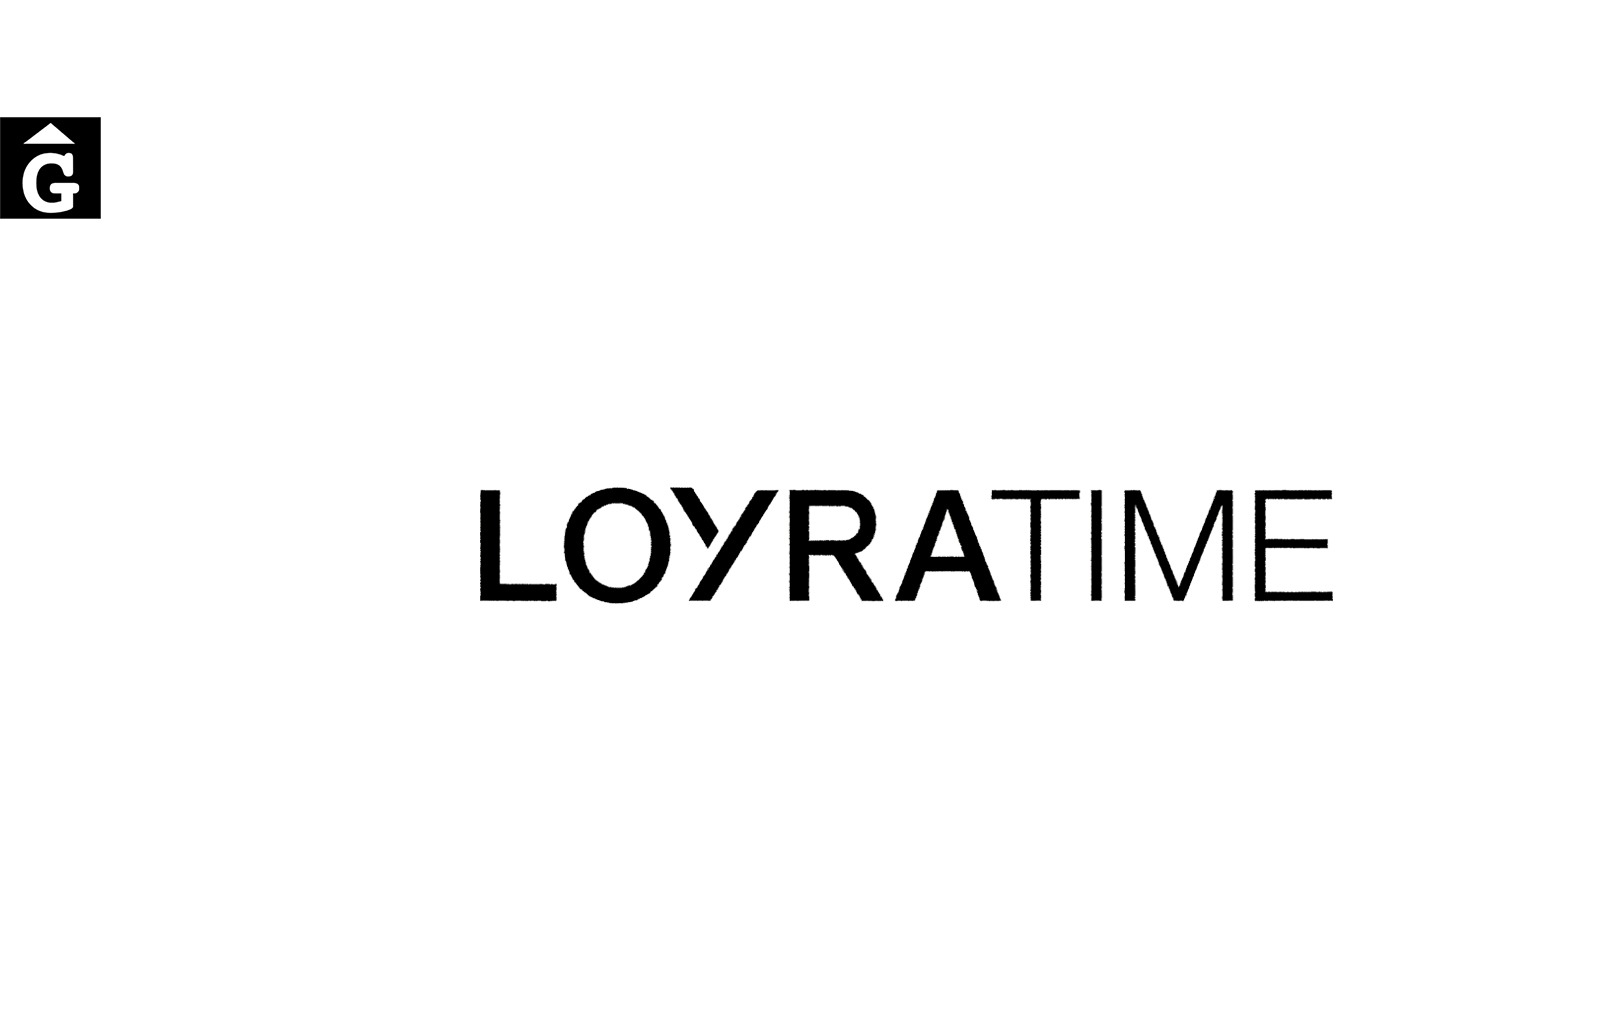 LoyraTime logo marca mobles Gifreu